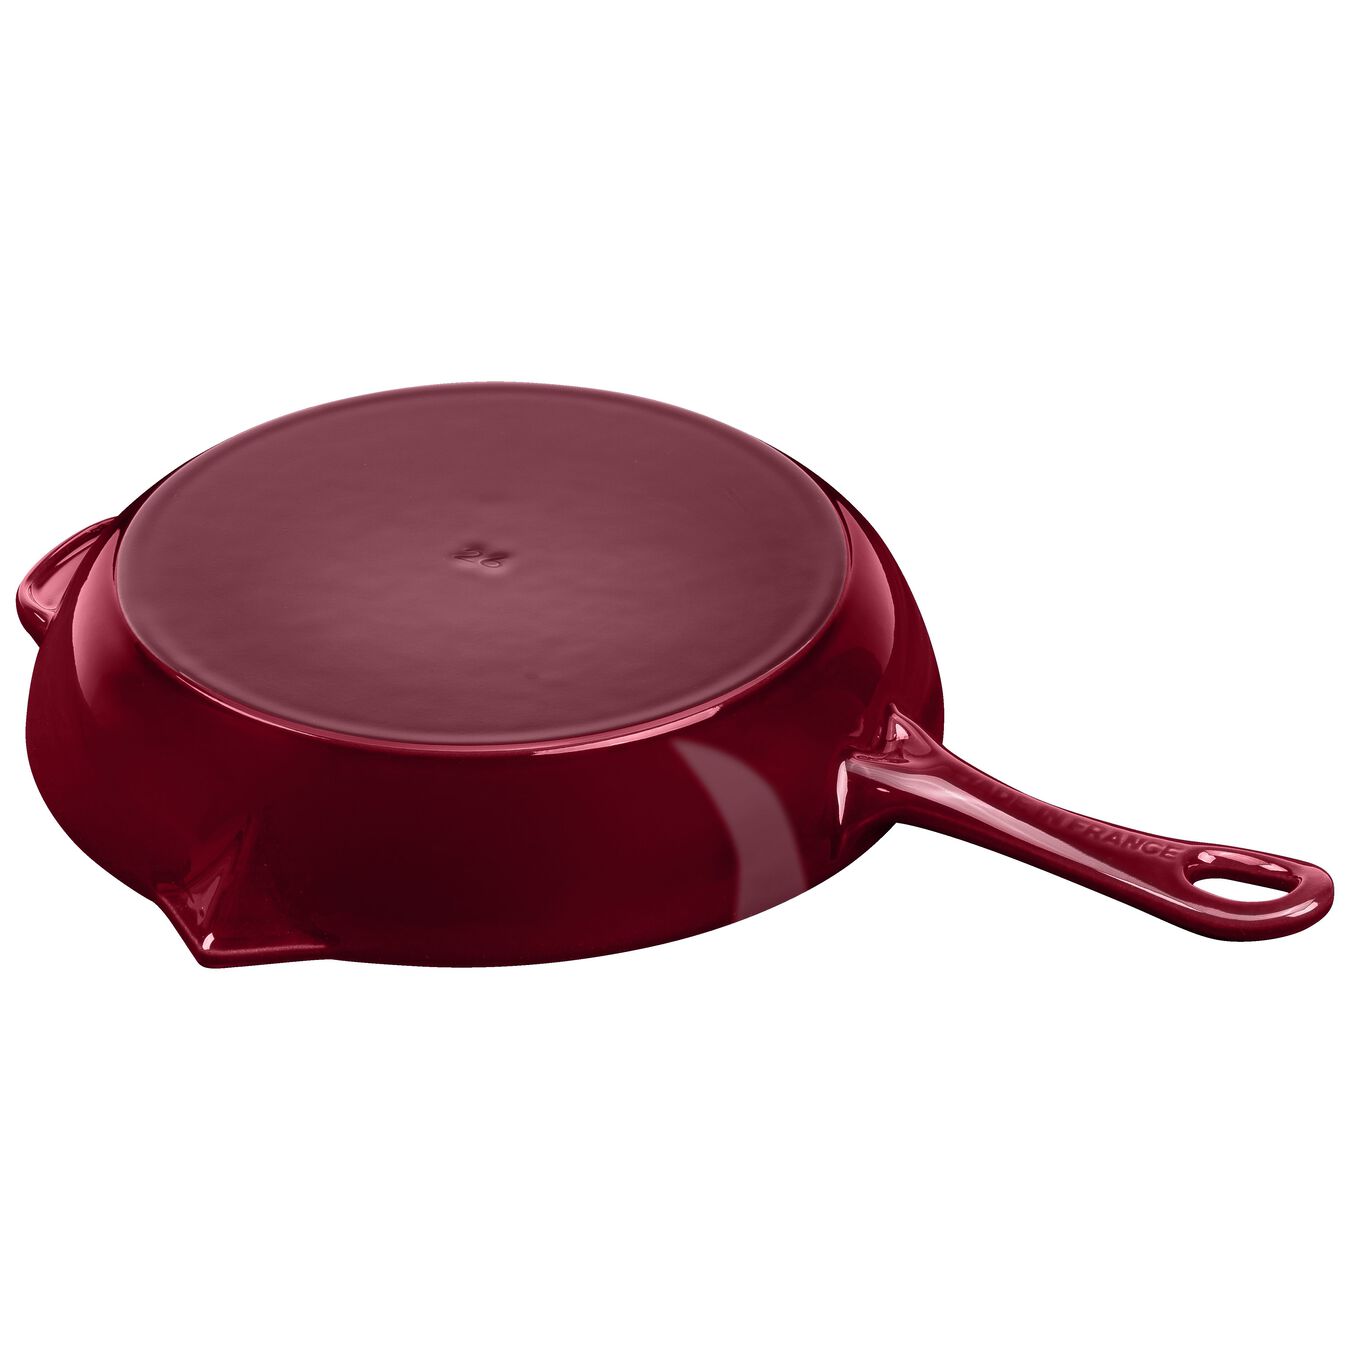 26 cm / 10 inch cast iron Frying pan with pouring spout, Bordeaux,,large 2